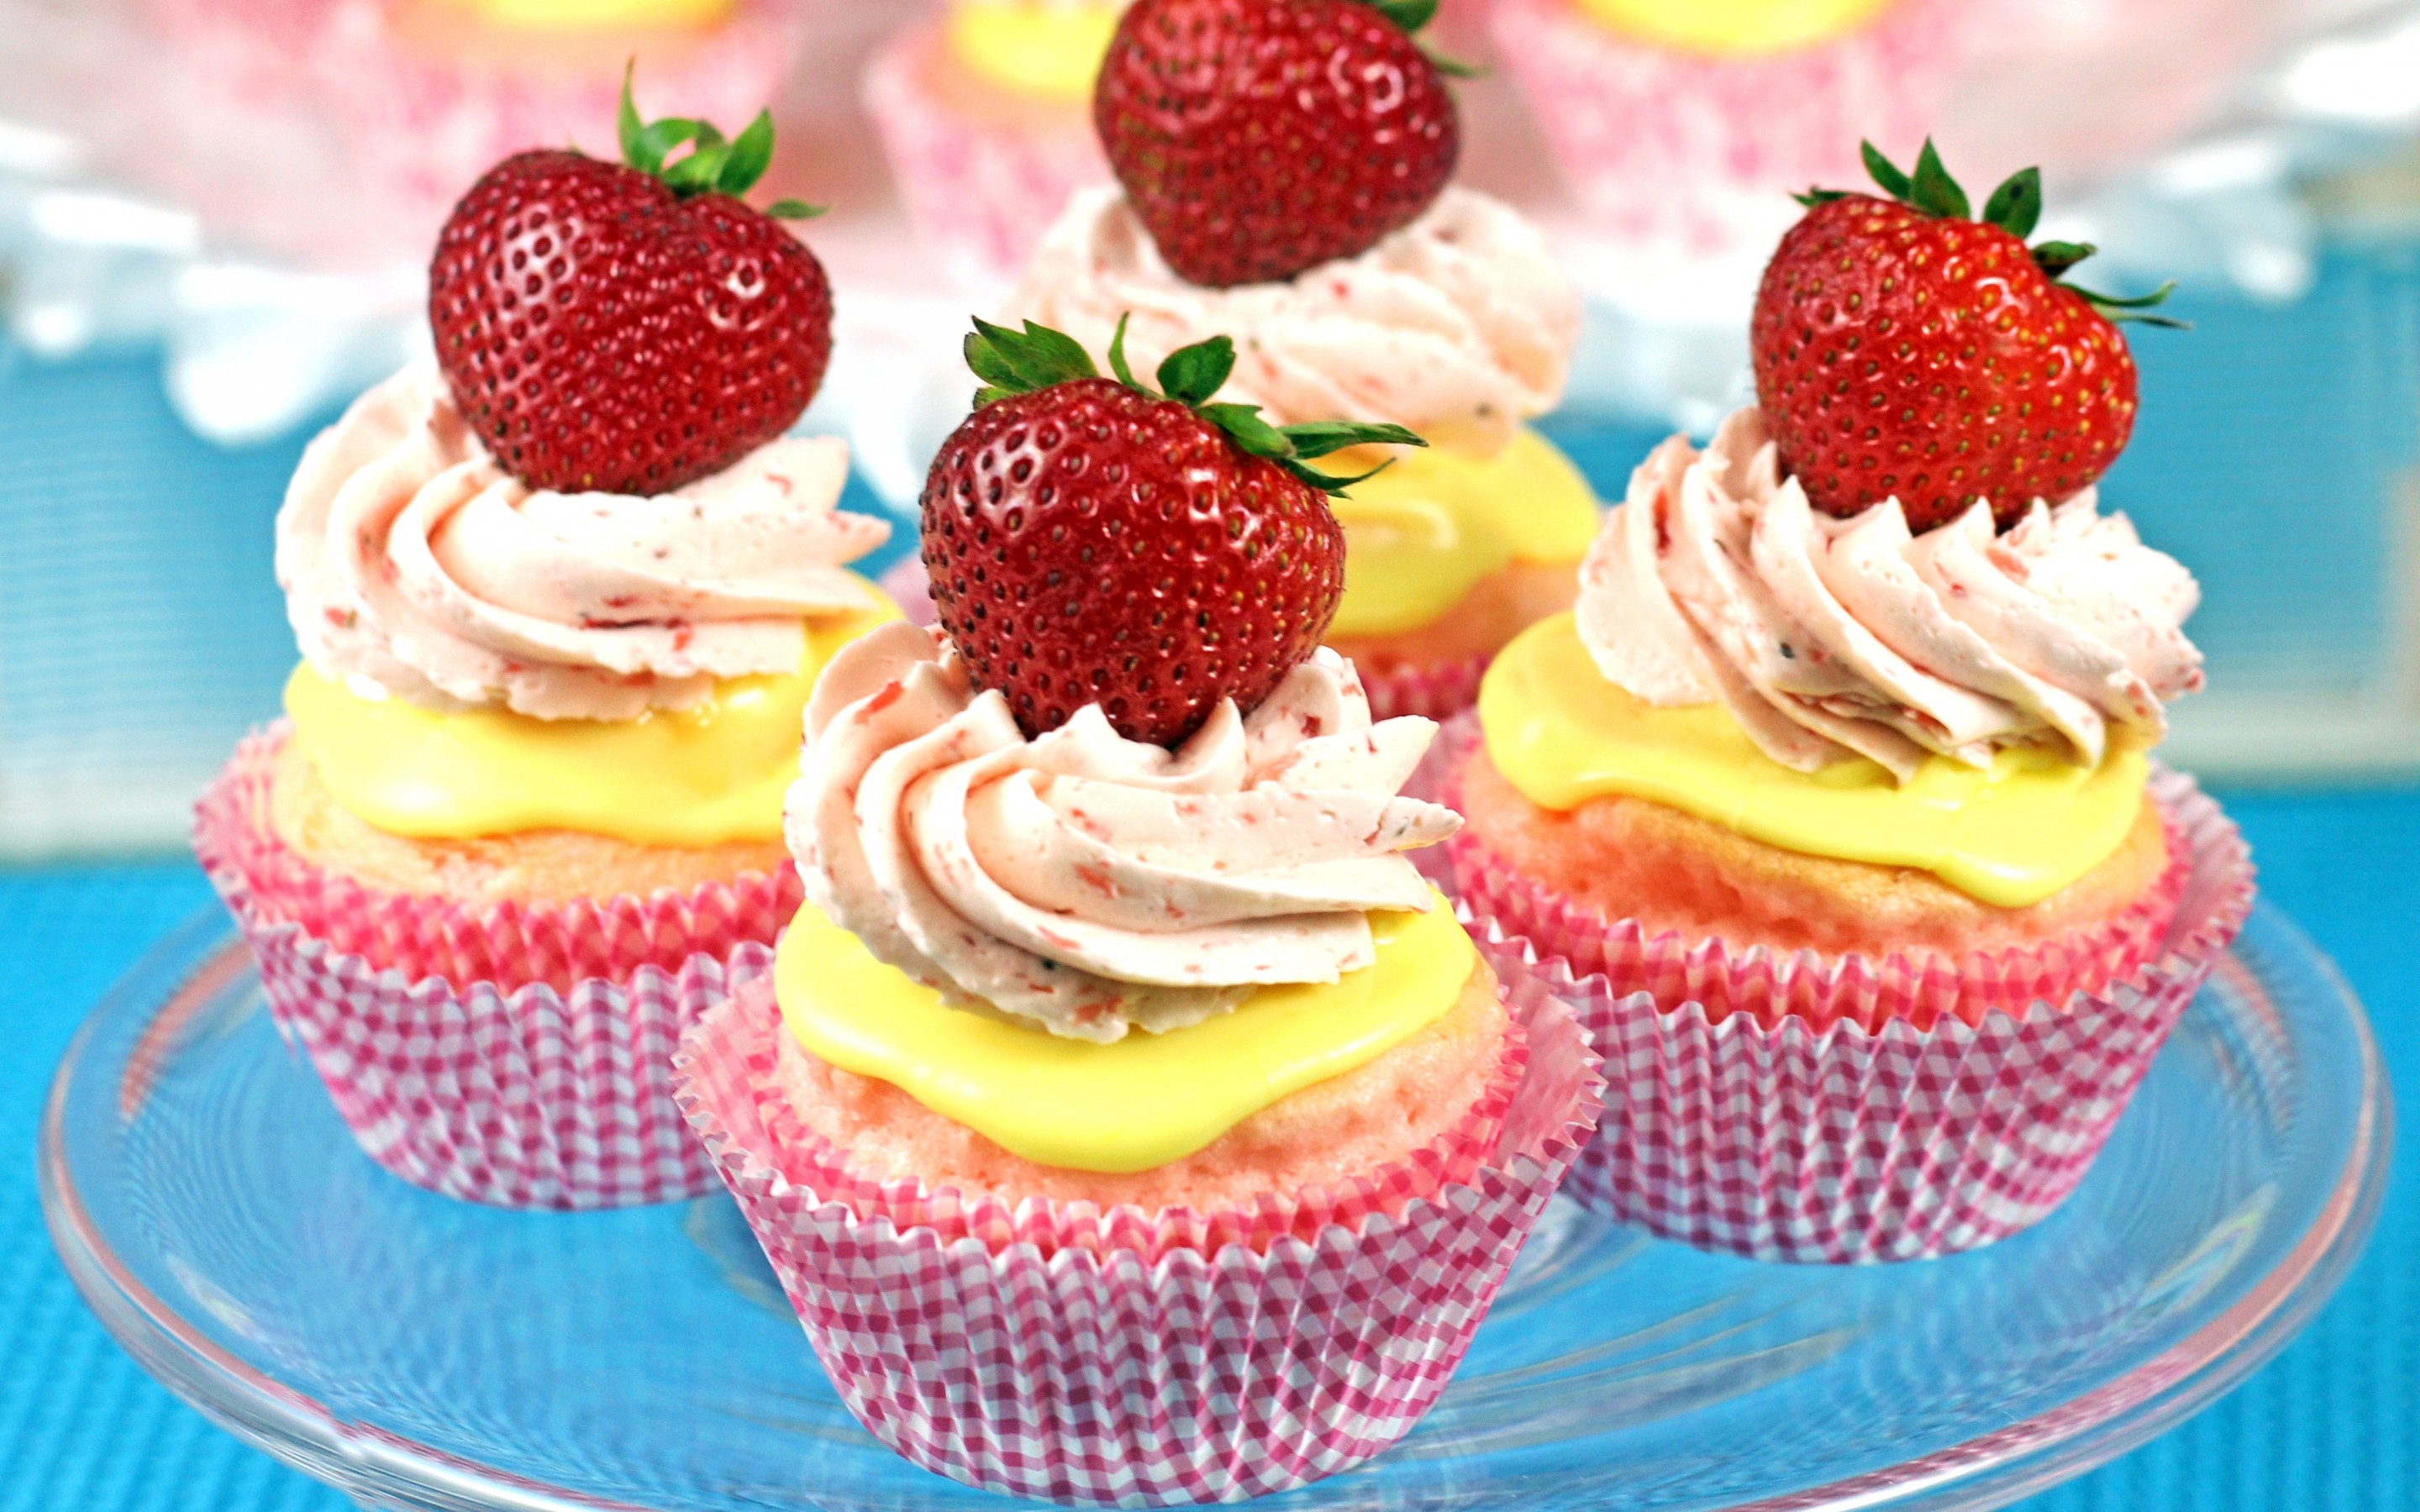  Cupcake  HD Wallpaper  Background Image 2880x1800 ID 